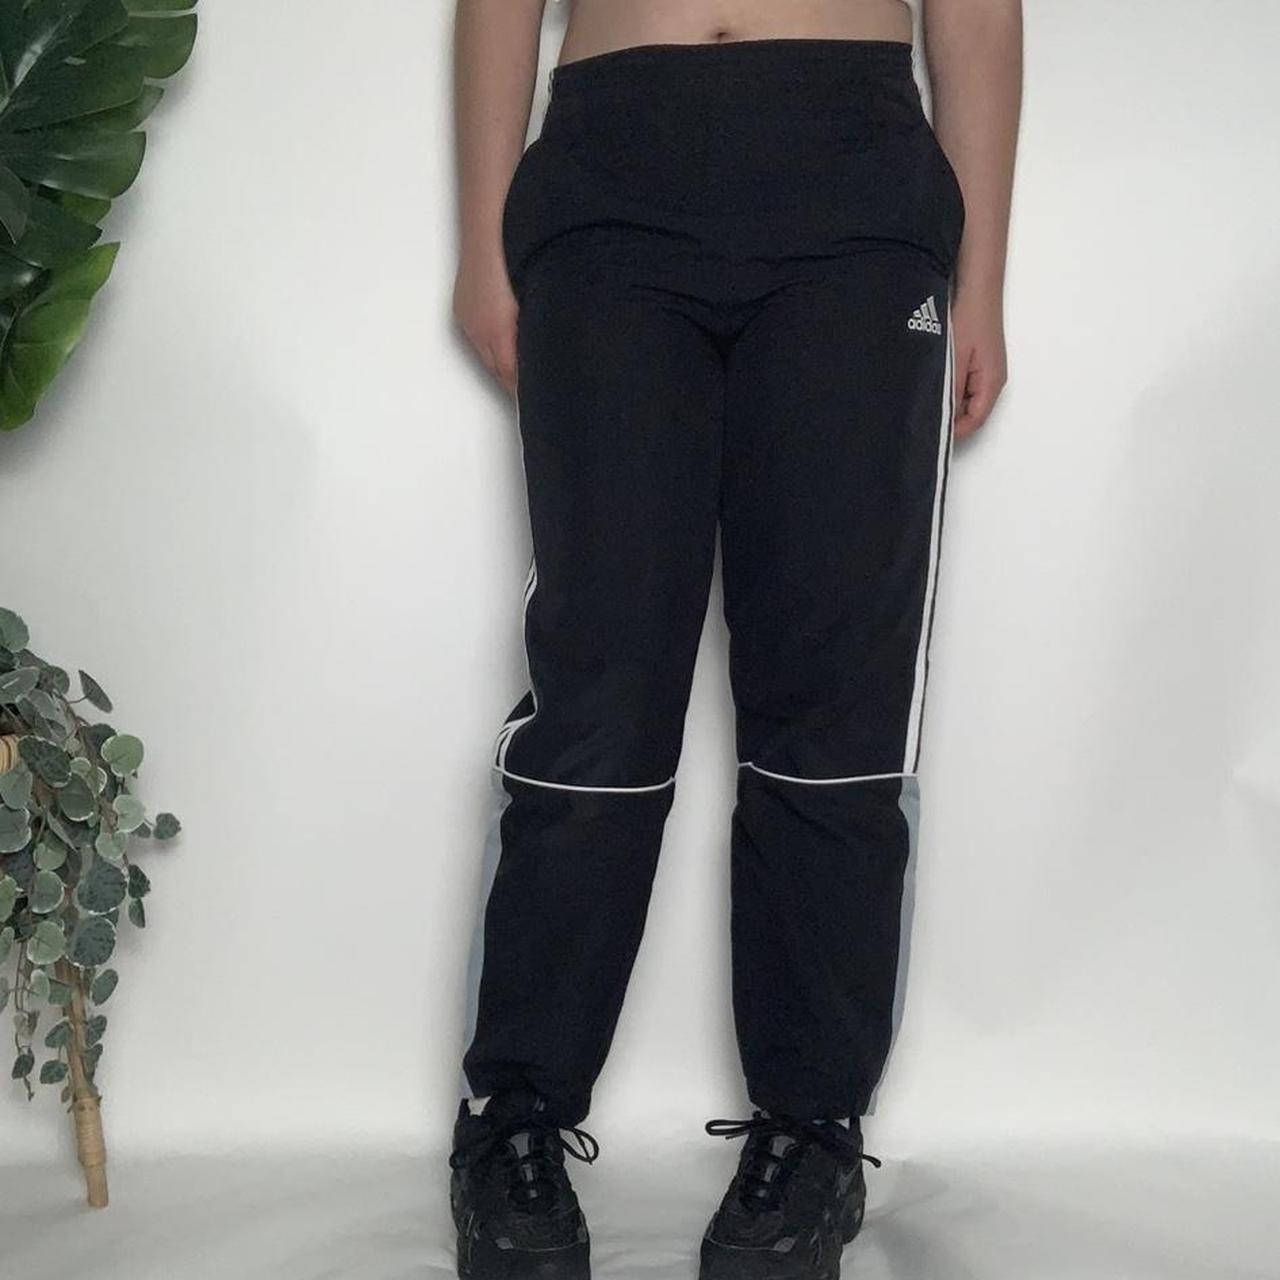 Adidas vintage unisex 90’s black and grey track pants